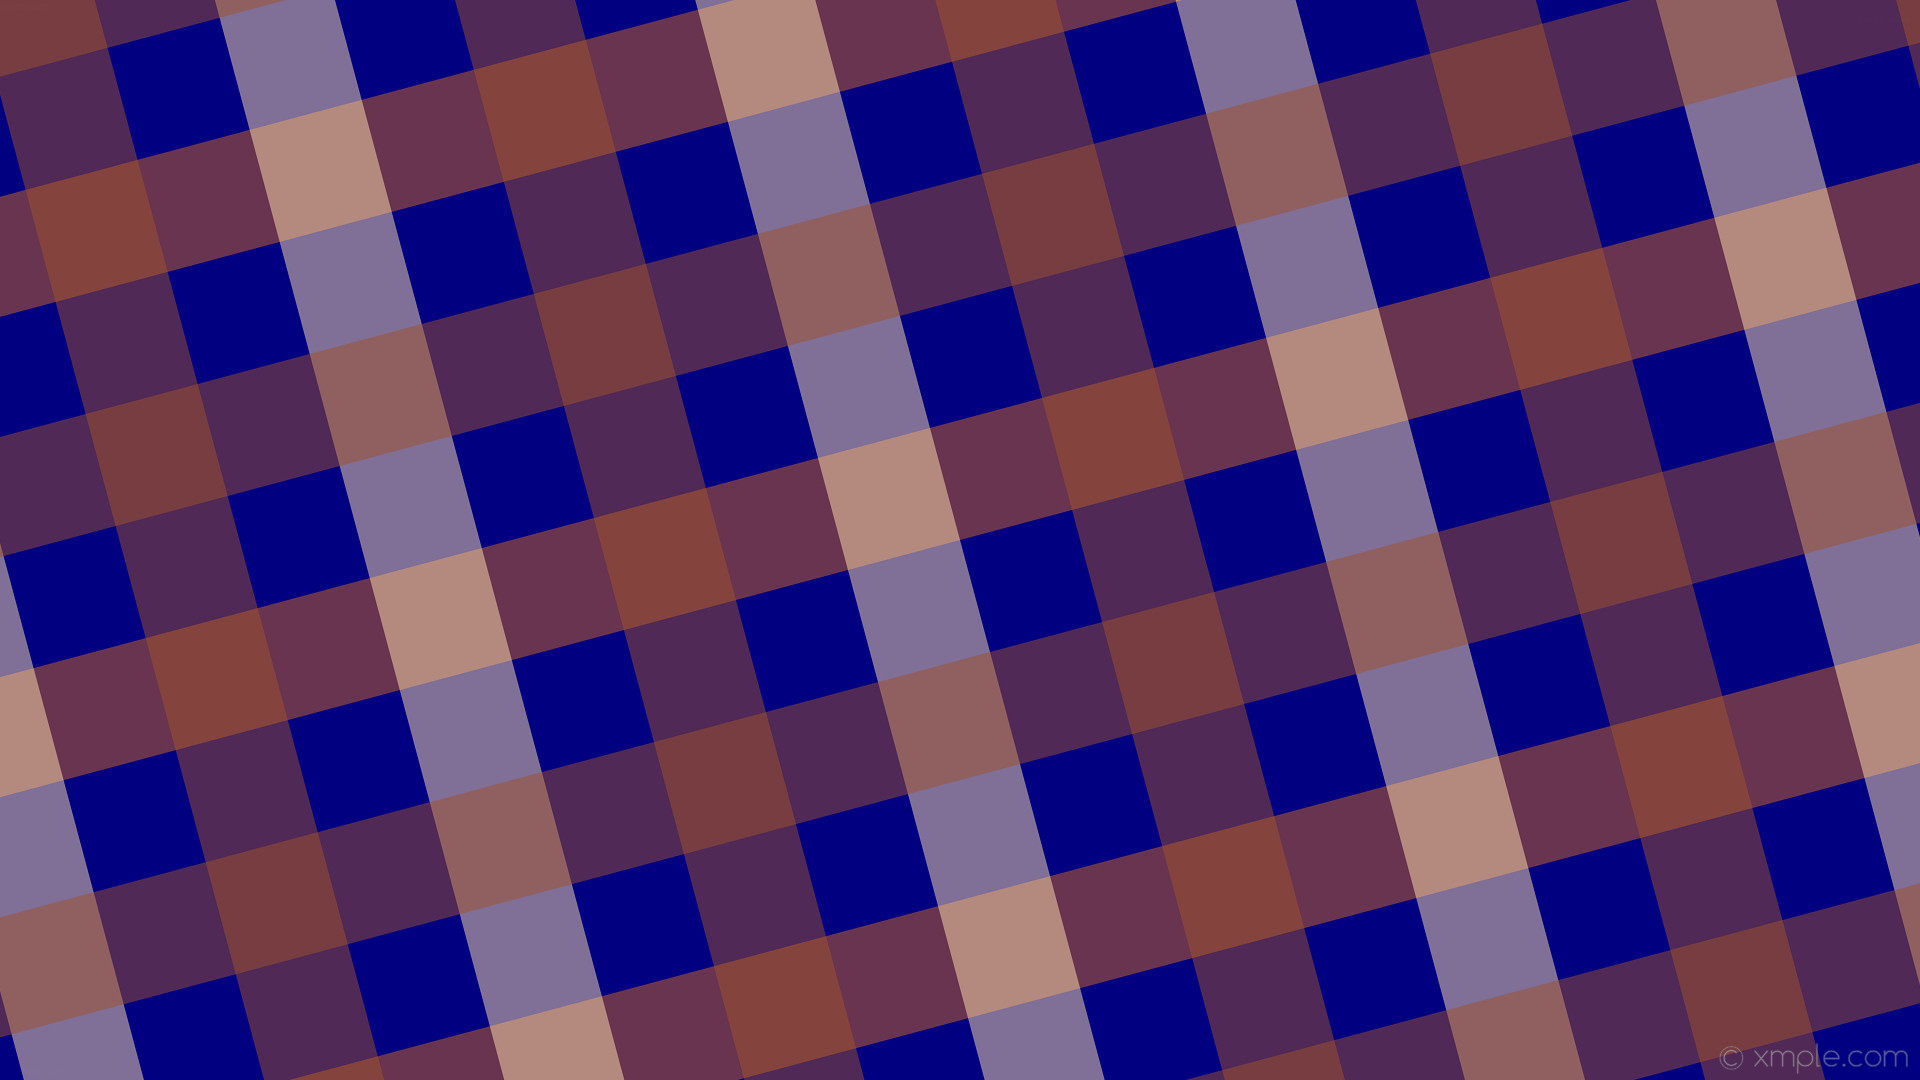 1920x1080 wallpaper striped gingham blue brown quad navy chocolate navajo white  sienna #000080 #d2691e #